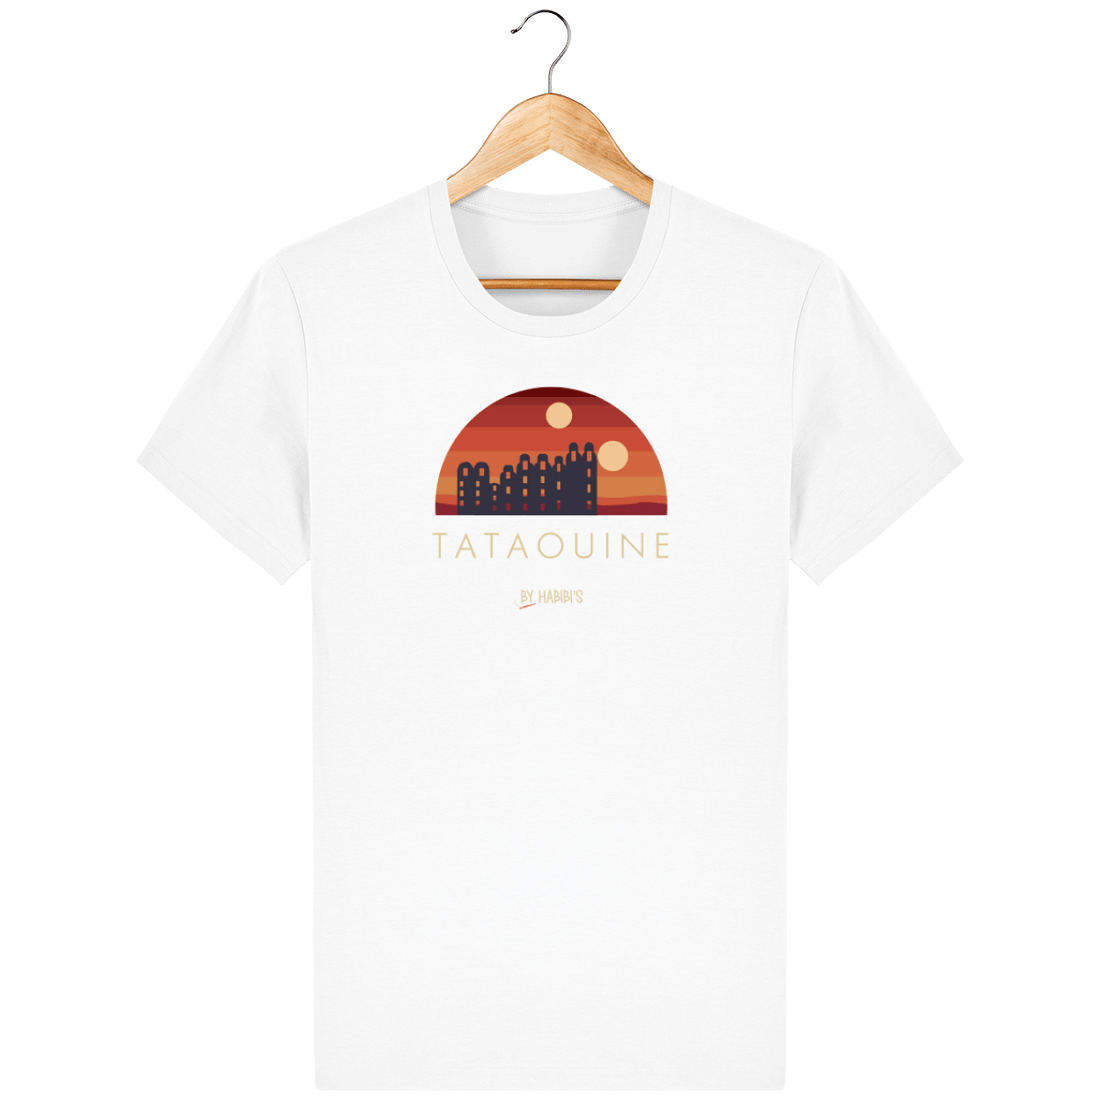 Unisexe>Tee-shirts - T-Shirt Homme TATAOUINE